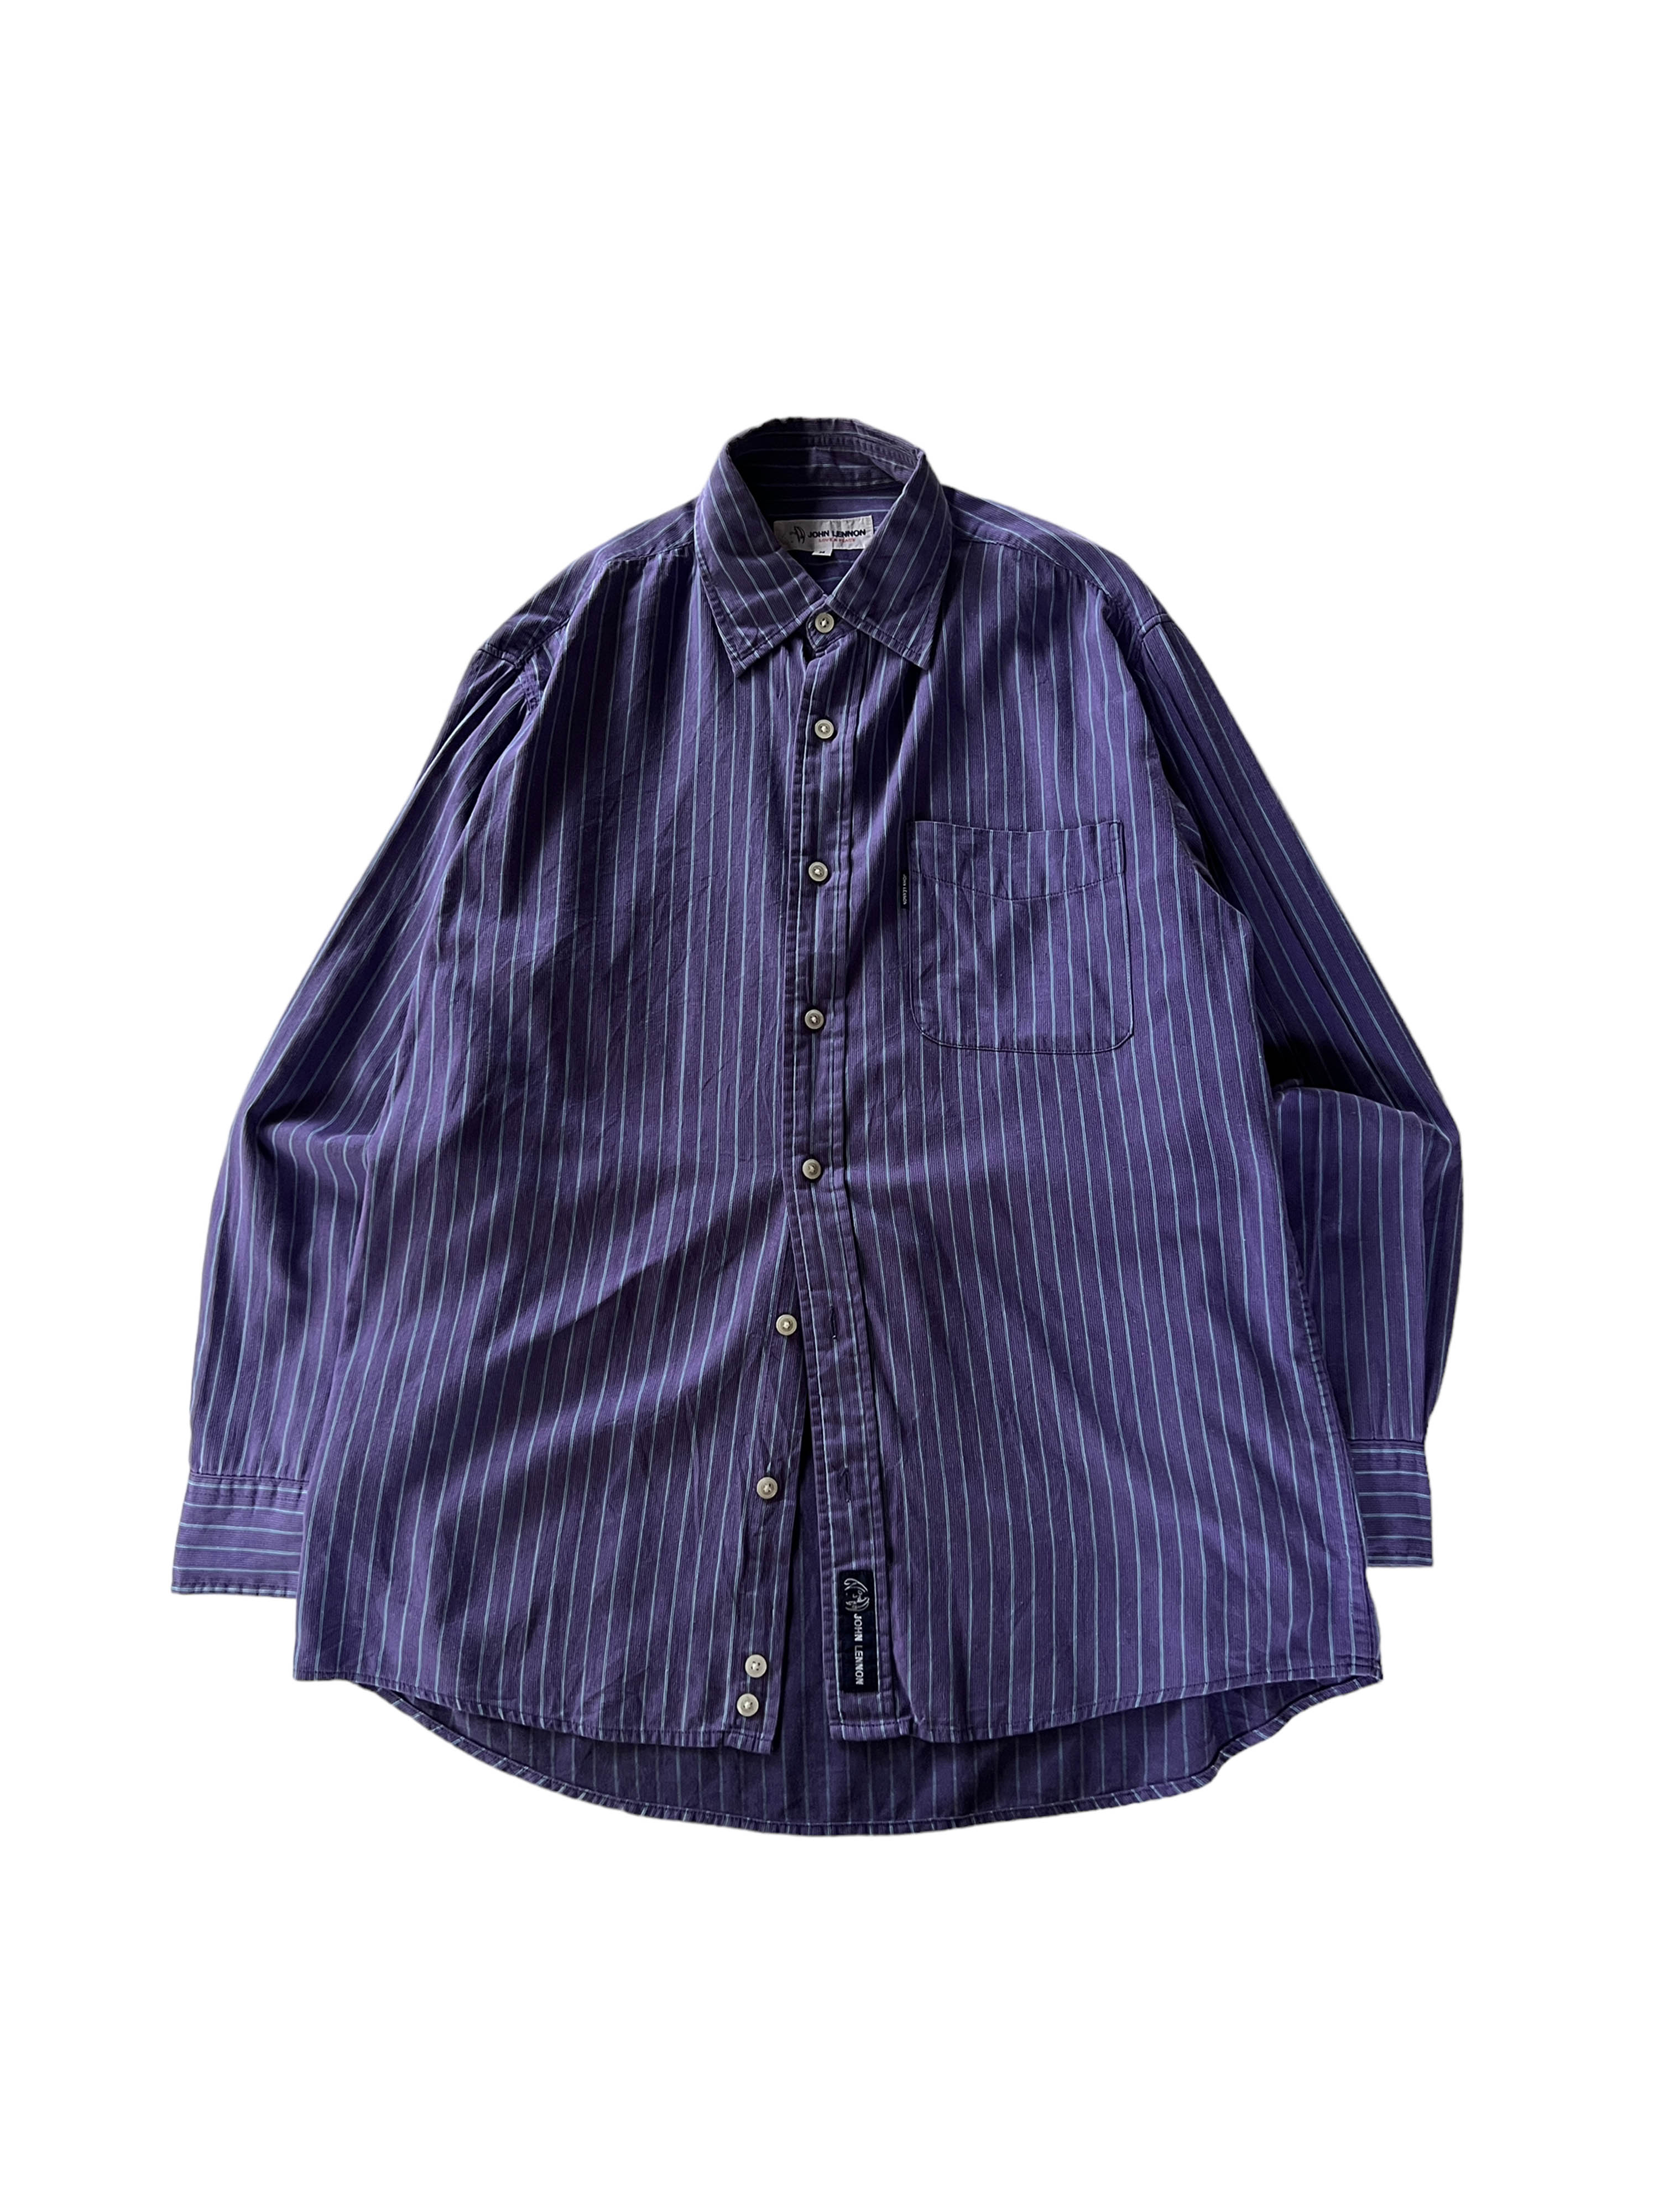 JOHN LENNON purple stripe shirts